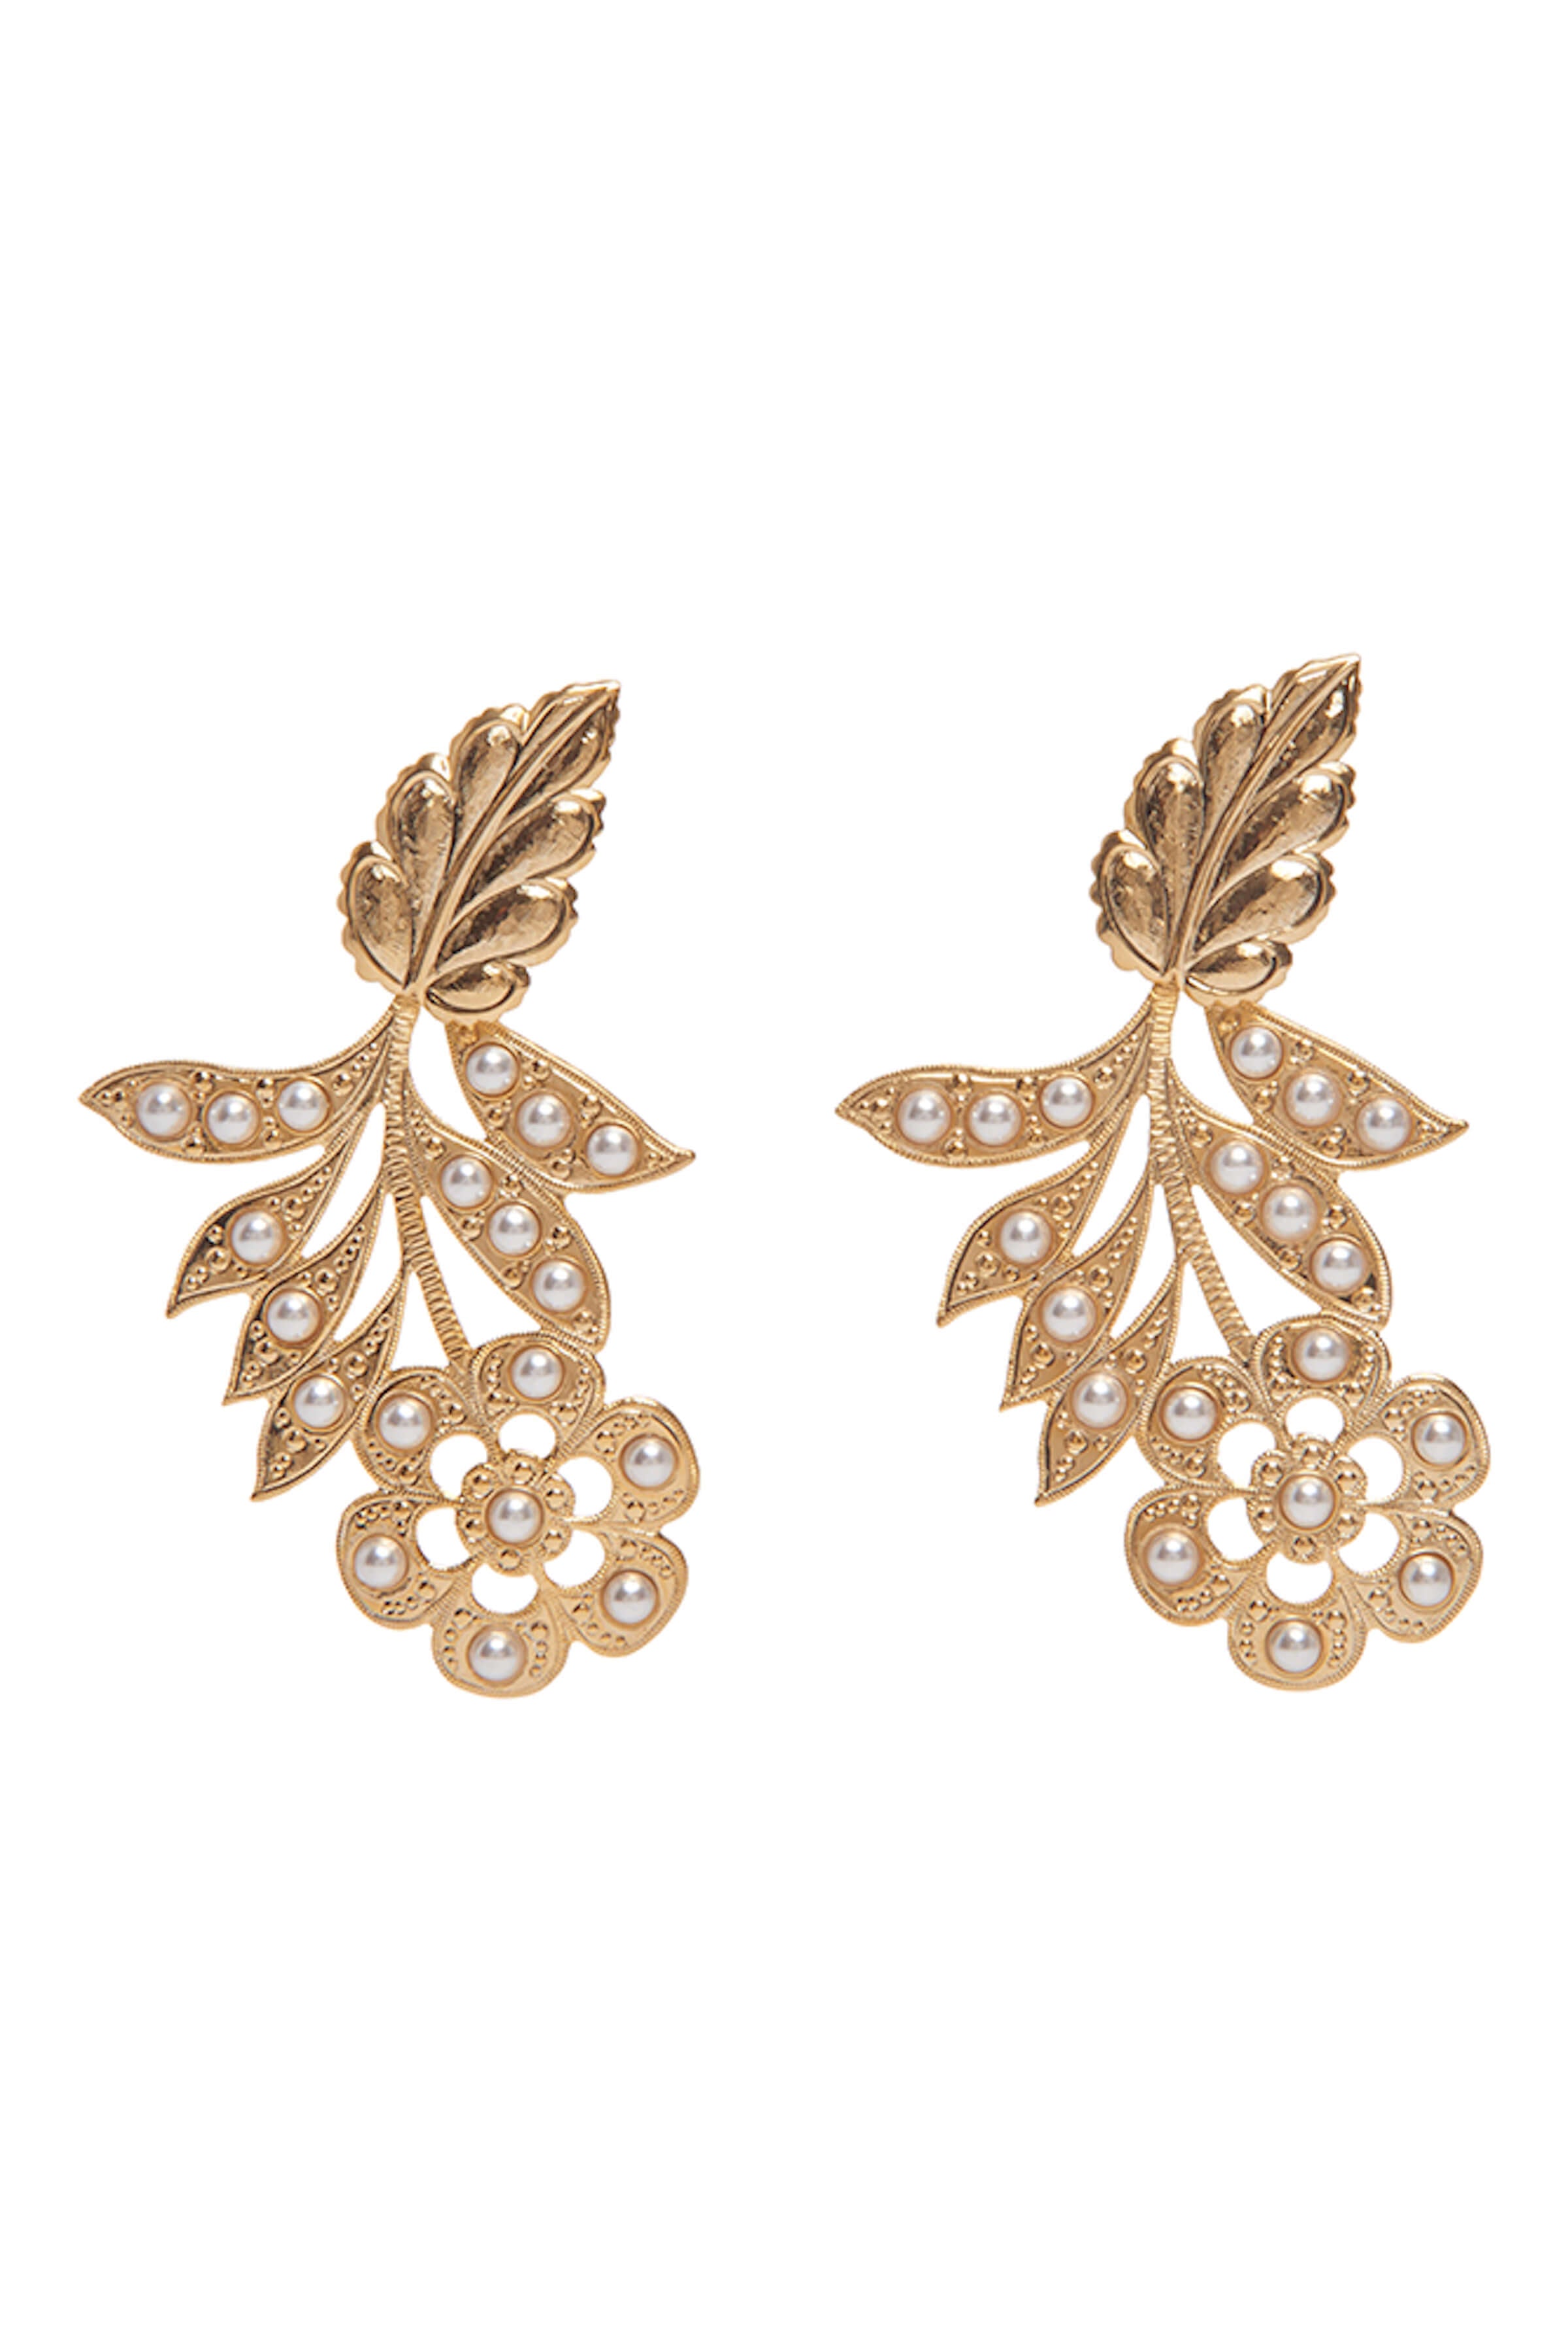 SPE Gold - Gold Floral Earrings Online - Poonamallee